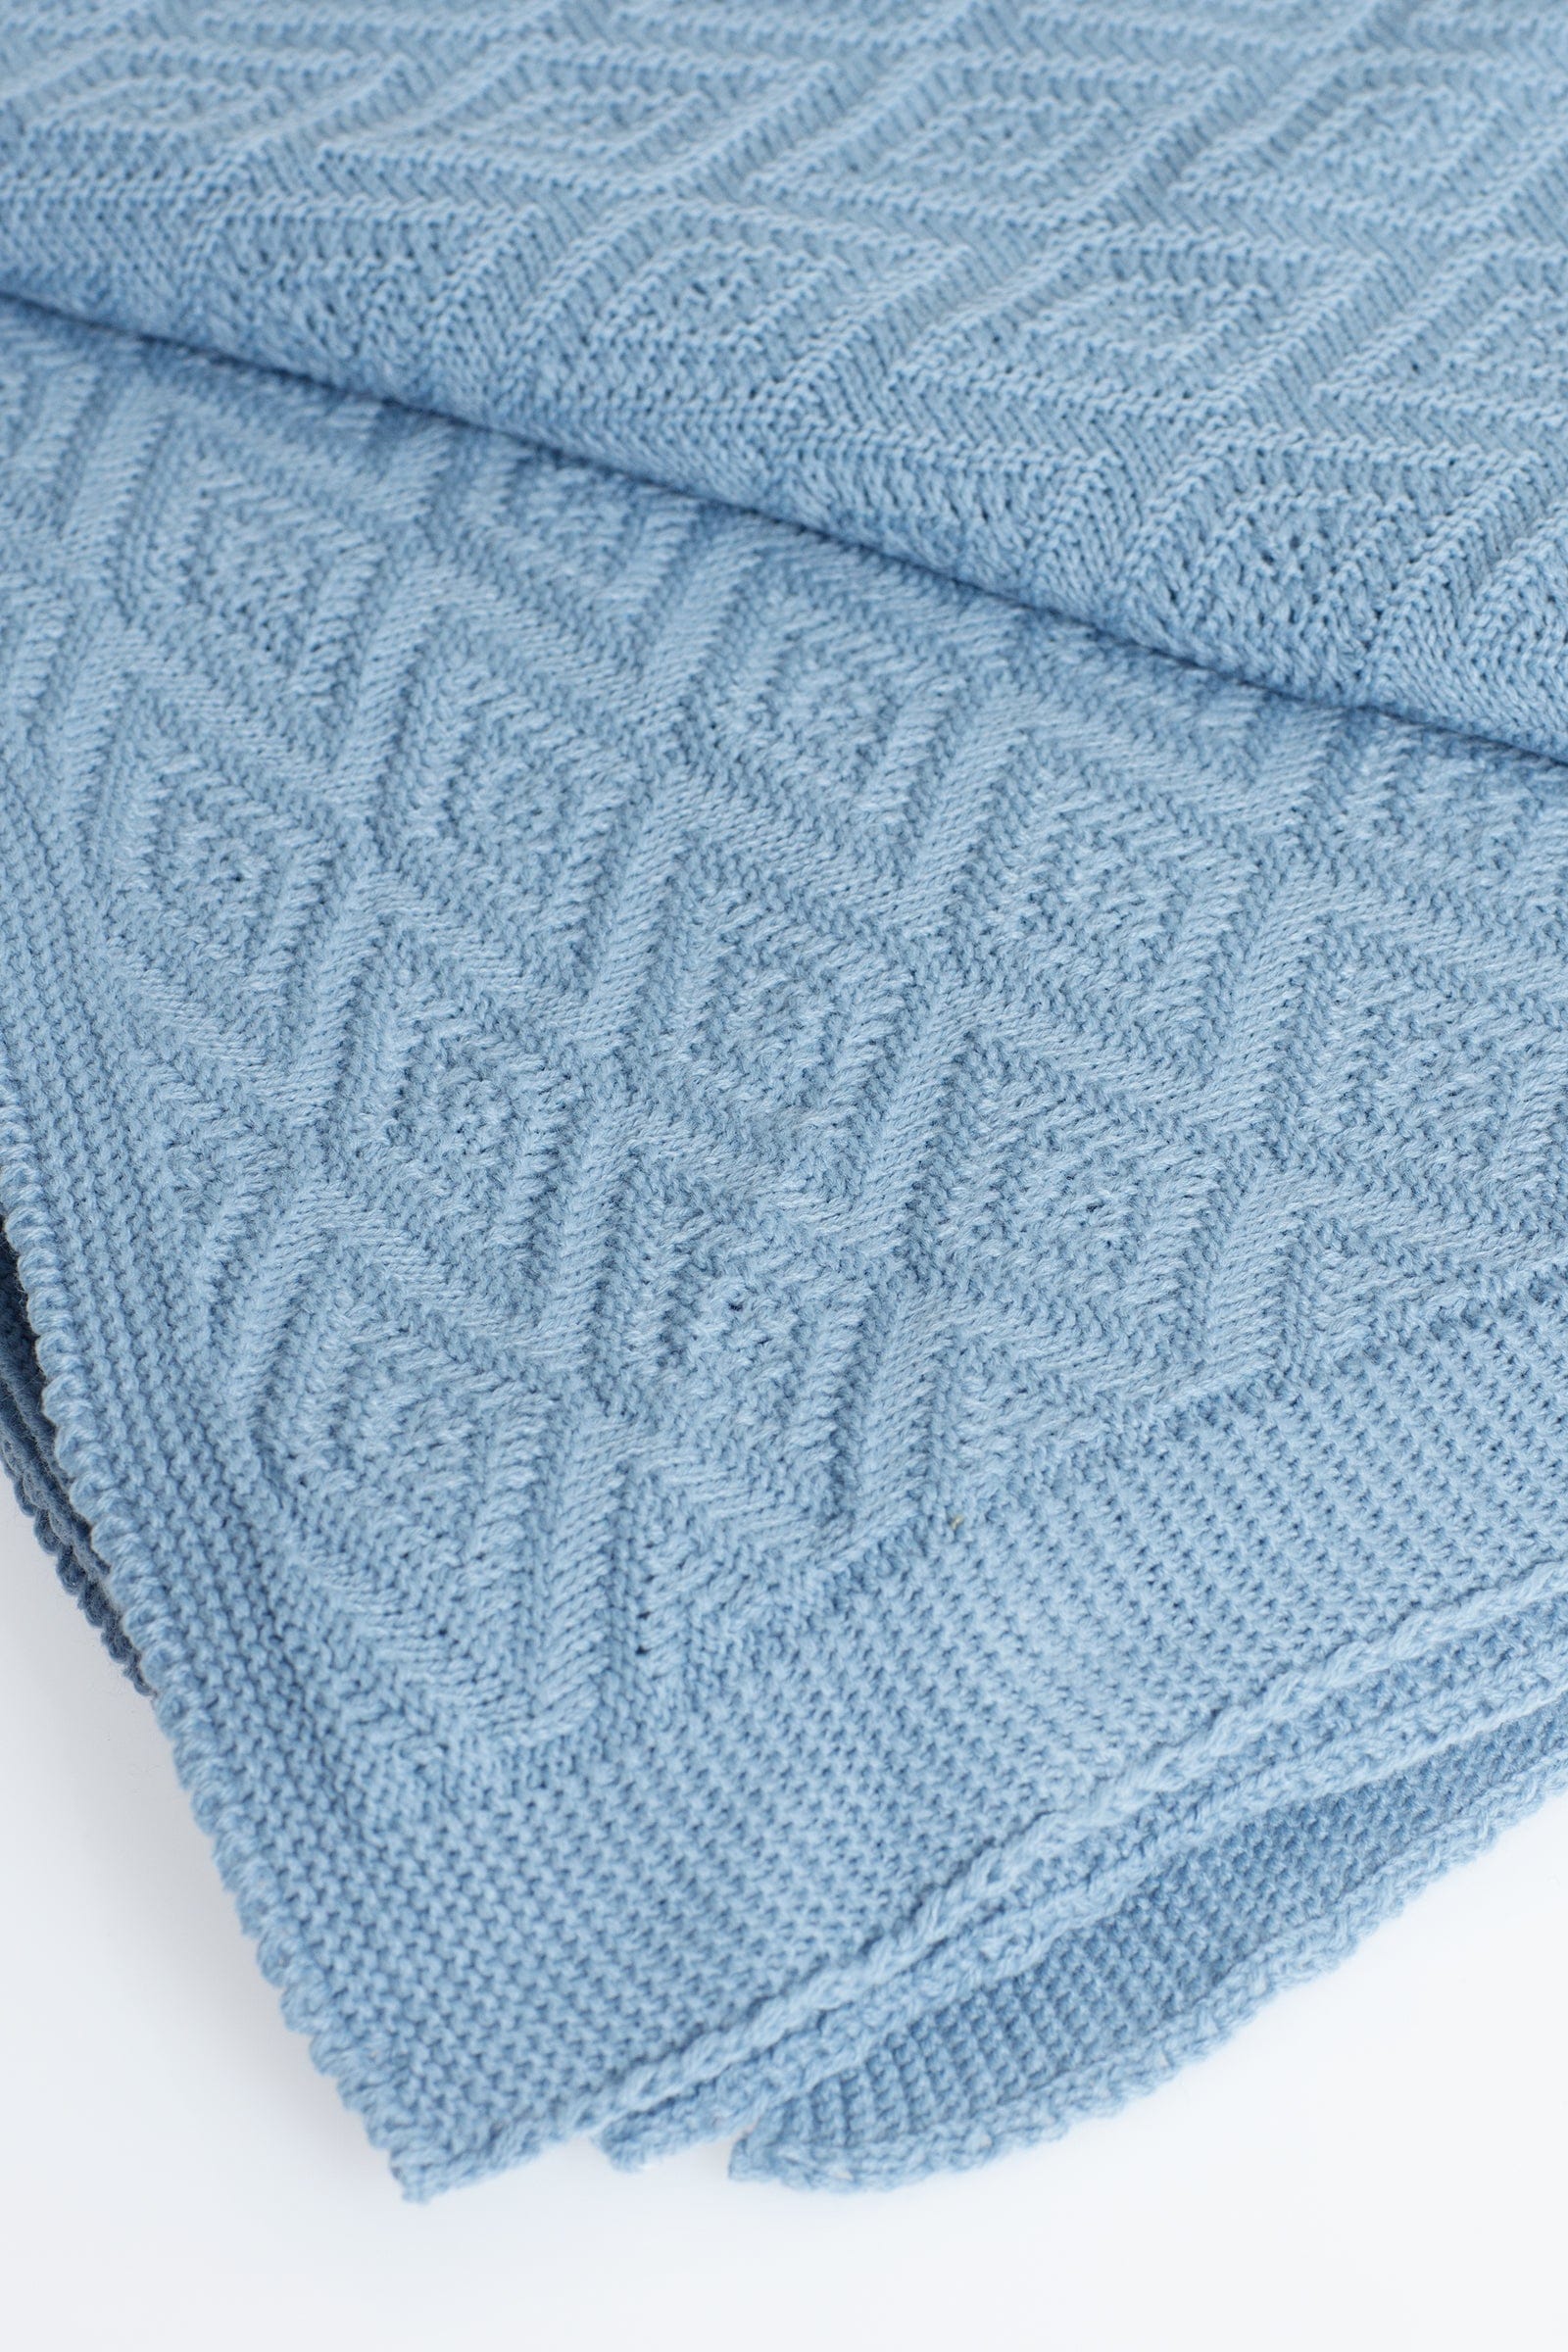 Dusty Blue - Diamond Stitch Blanket - notjust